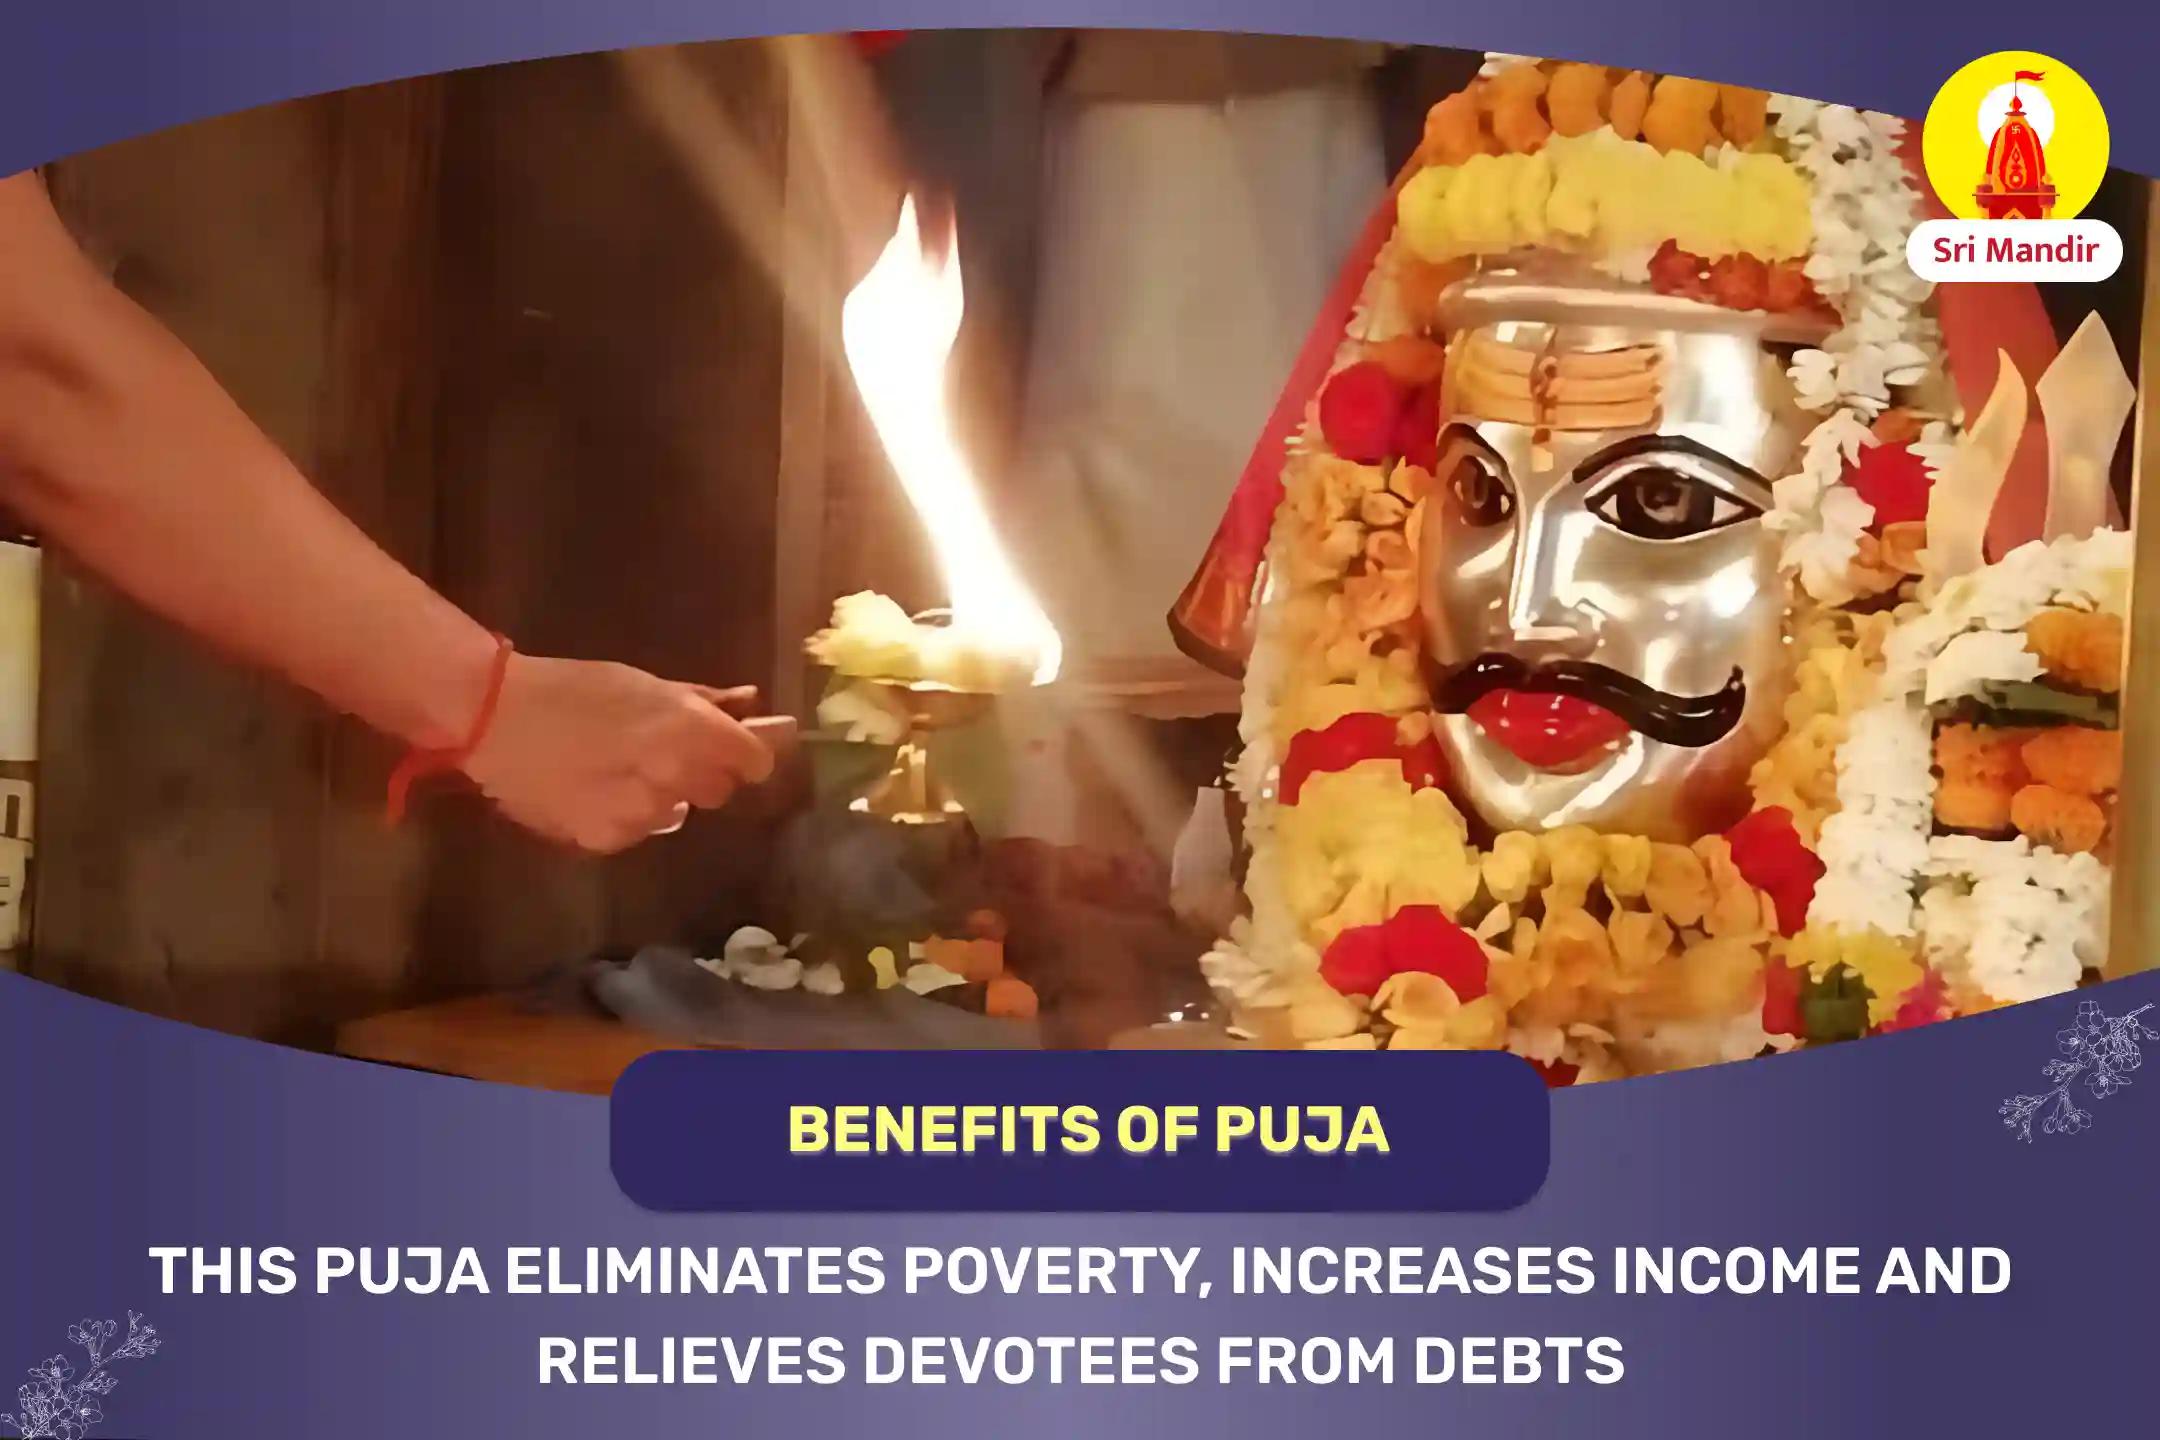 Monday Special Rin Mukti Shiva Havan and Mankameshwar Rudrabhishek Puja for Debt Relief and Accumulation of Wealth